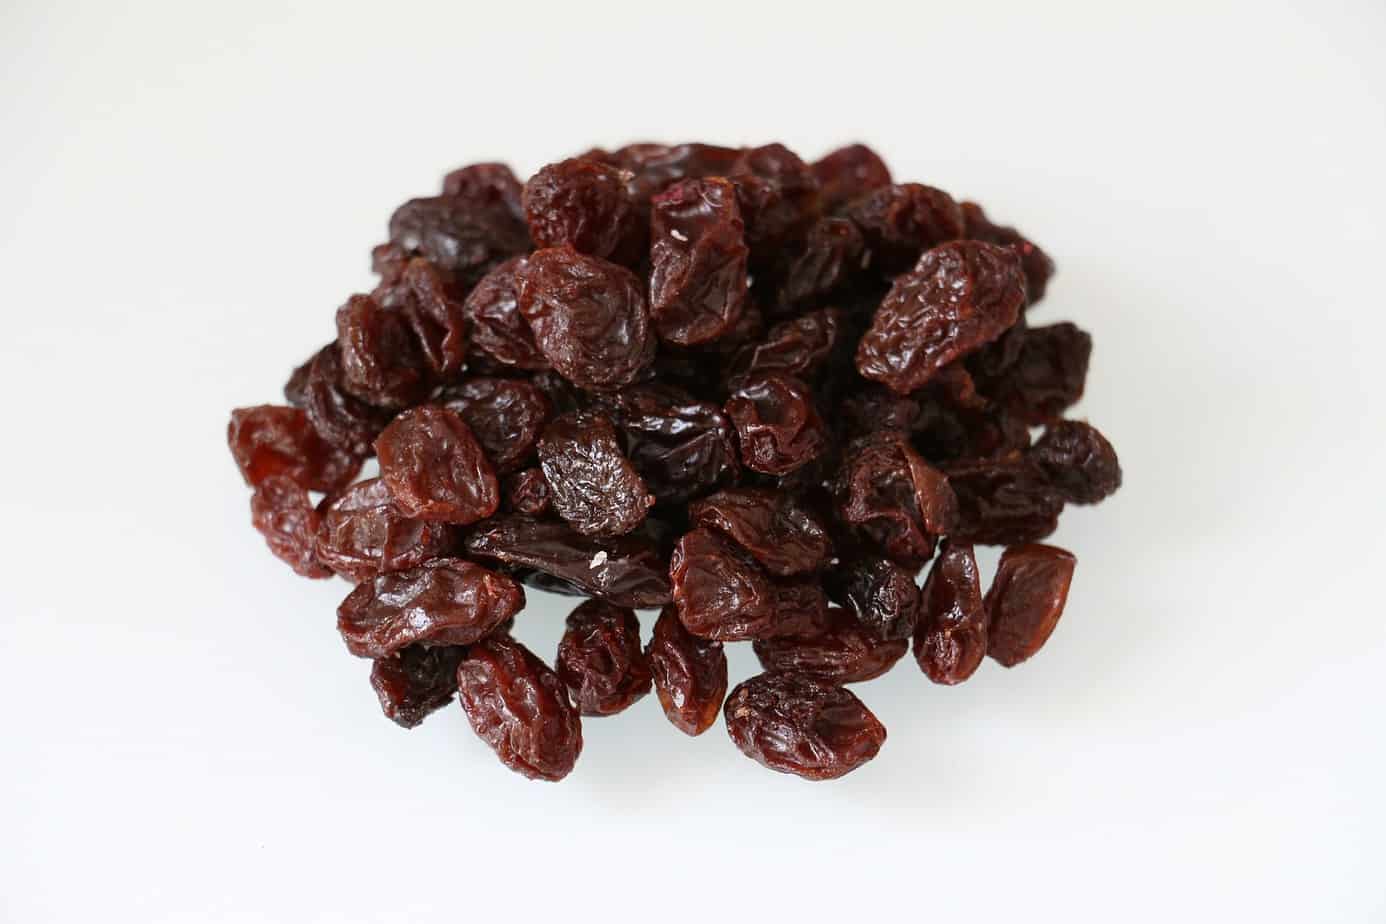 plain raisins on a white background